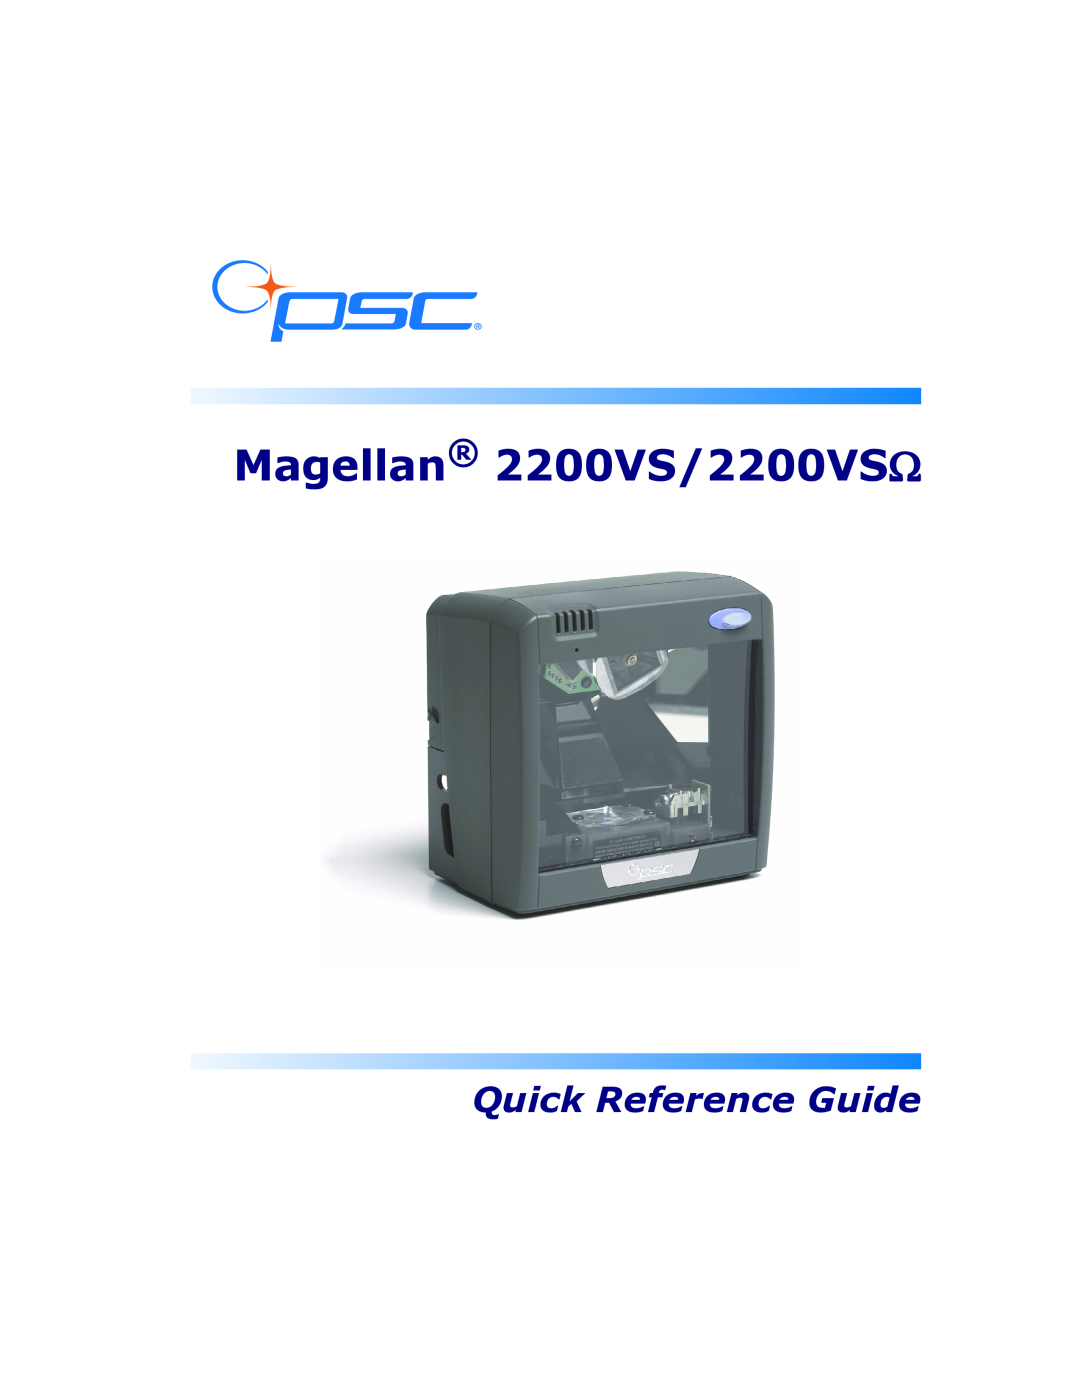 PSC manual Magellan 2200VS/2200VSΩ, Quick Reference Guide 